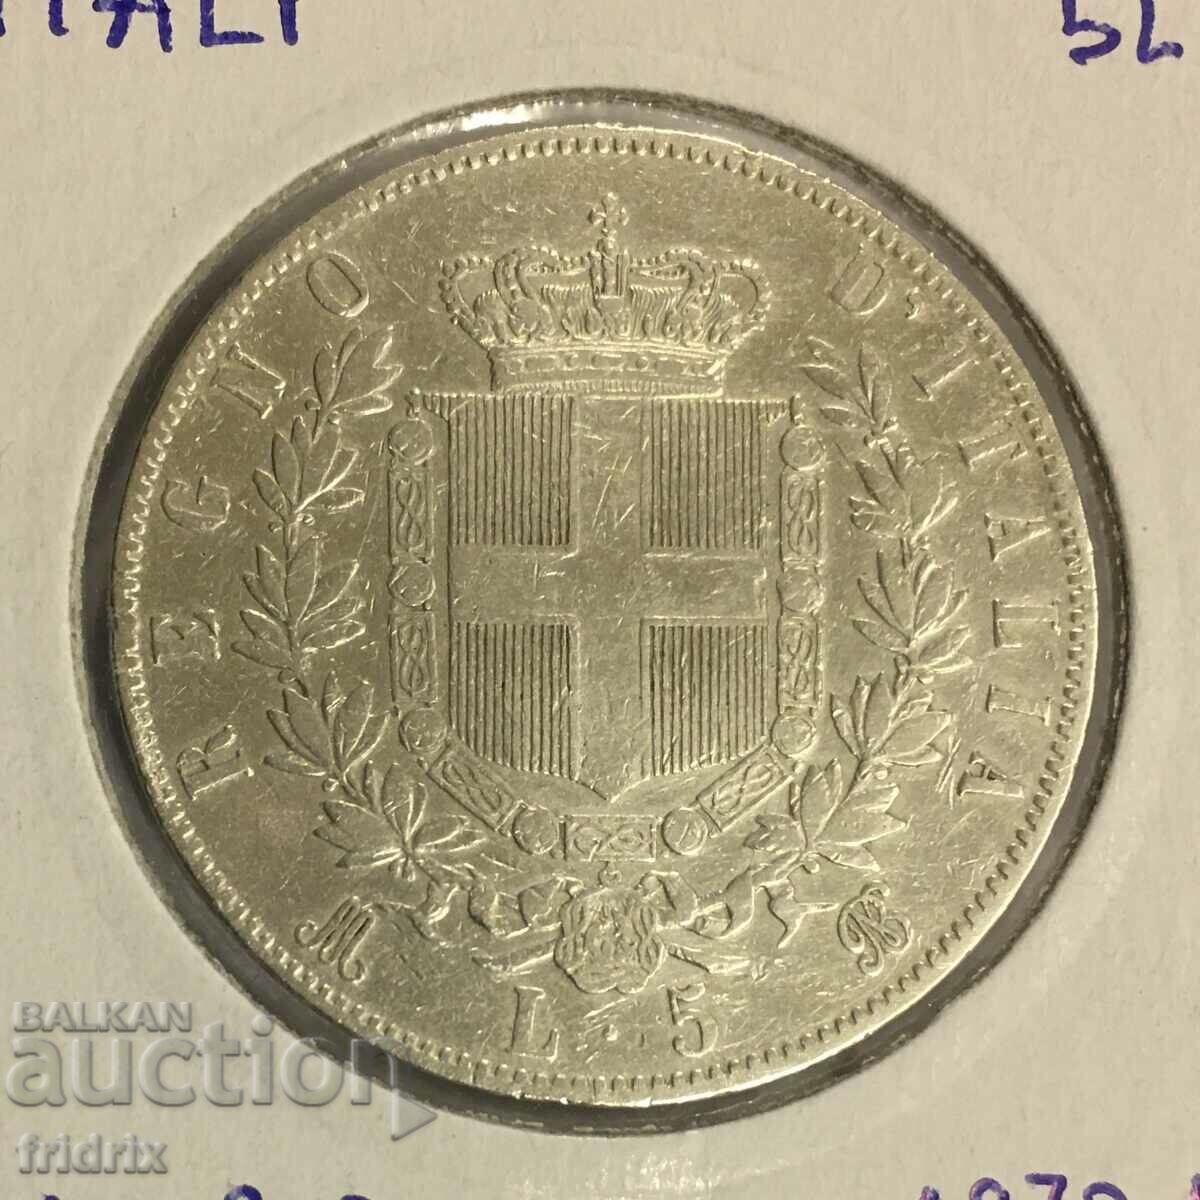 Italy 5 lira 1872 M / Italy 5 lira 1872 M